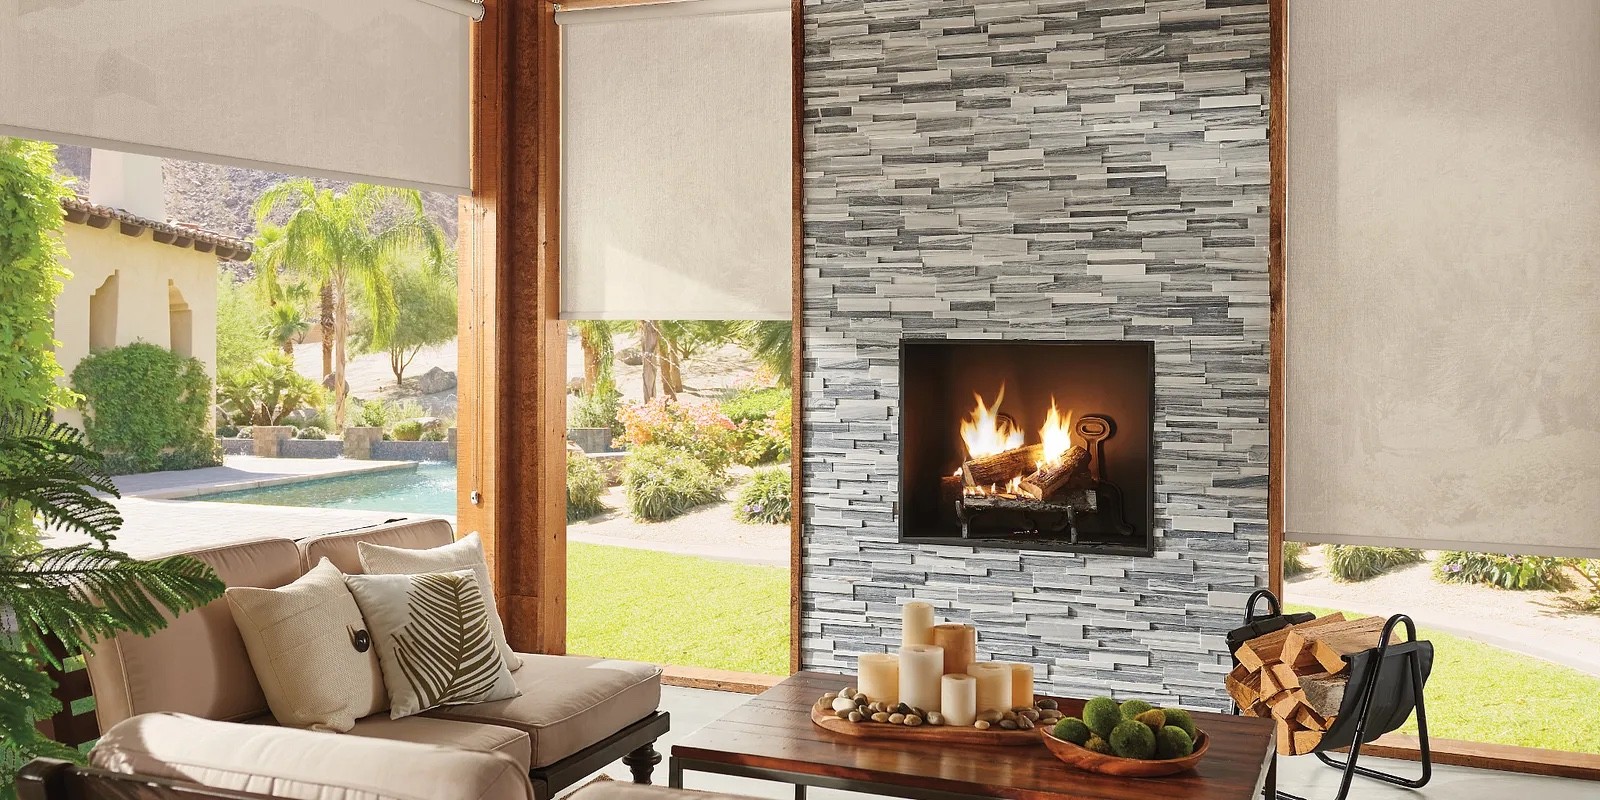 Flooring near fireplace | Floor To Ceiling-Lake Design & Decor